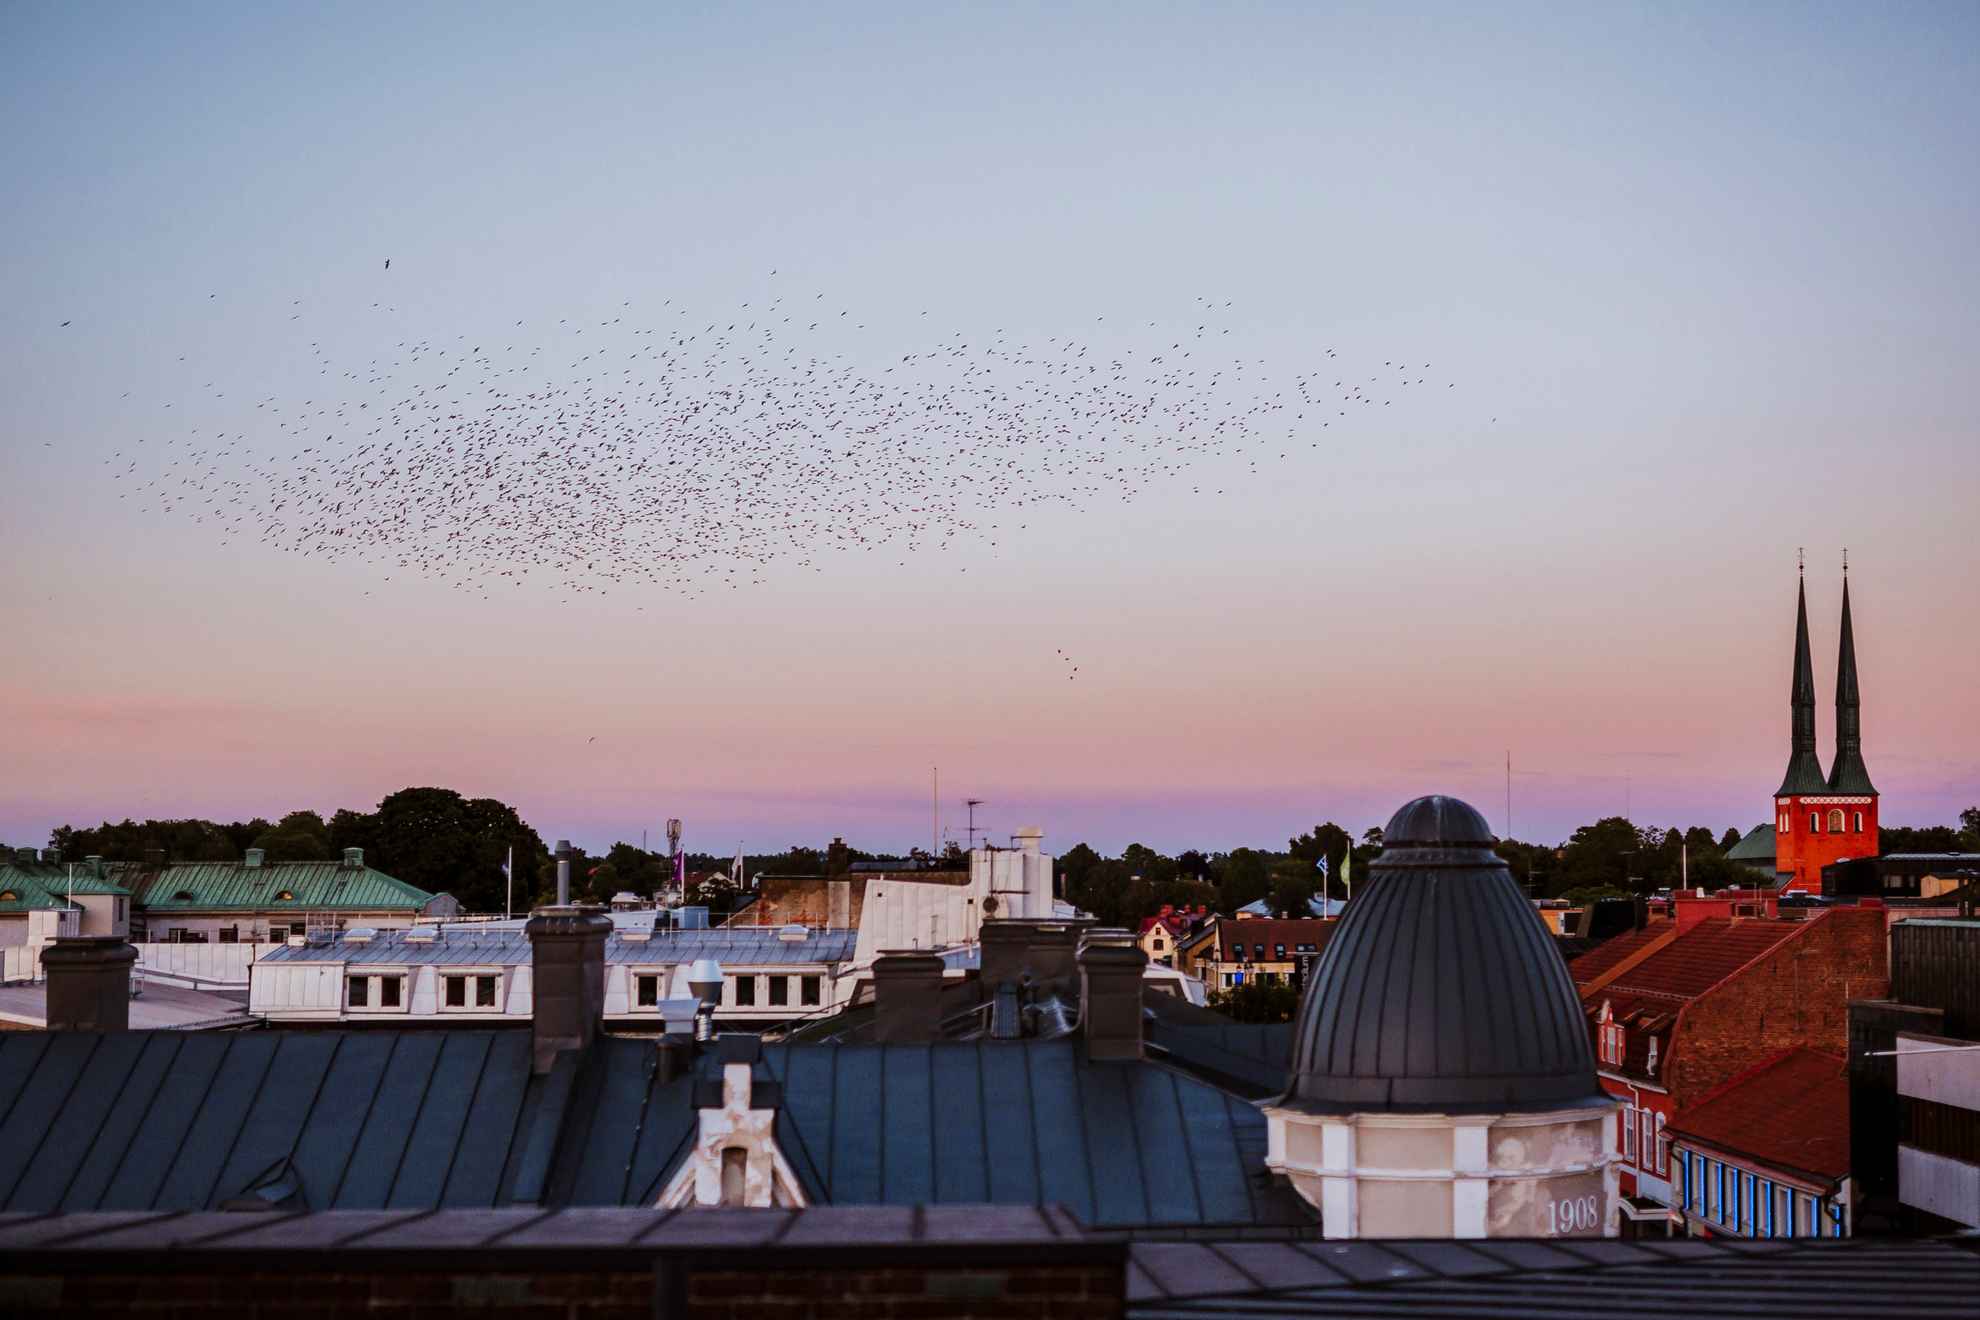 View of Växjö's rooftops at dusk. A flock of birds flies across the sky.